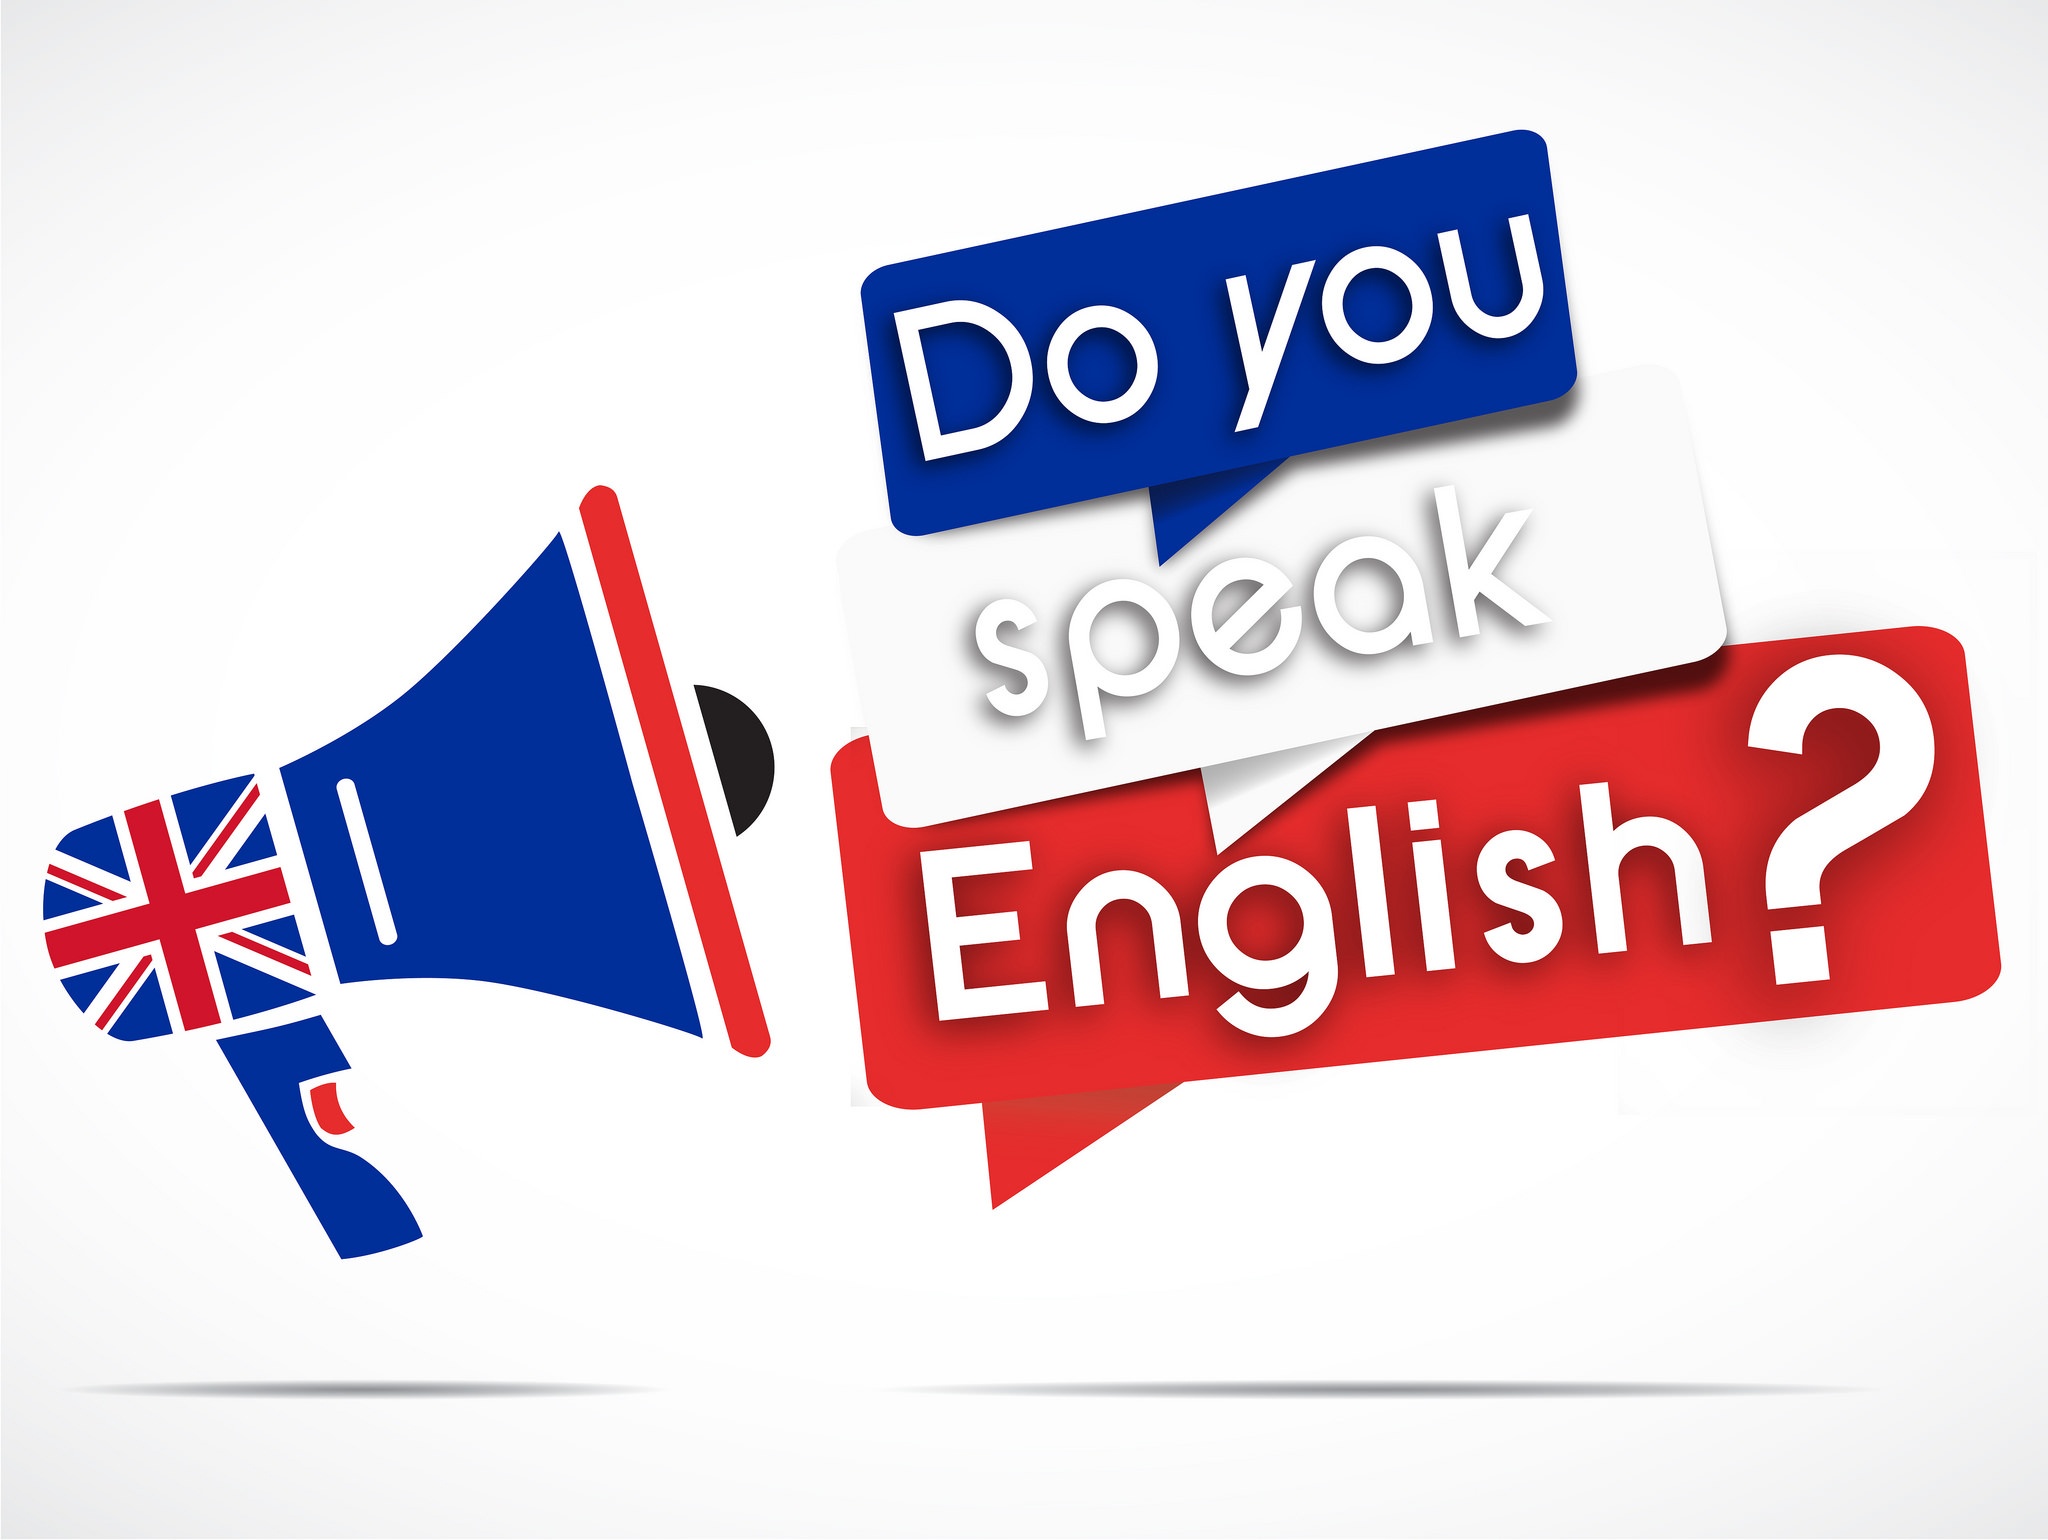 Can you speak english now. Speak English картинка. Do you speak English. Speak English надпись. Английский язык do you speak.